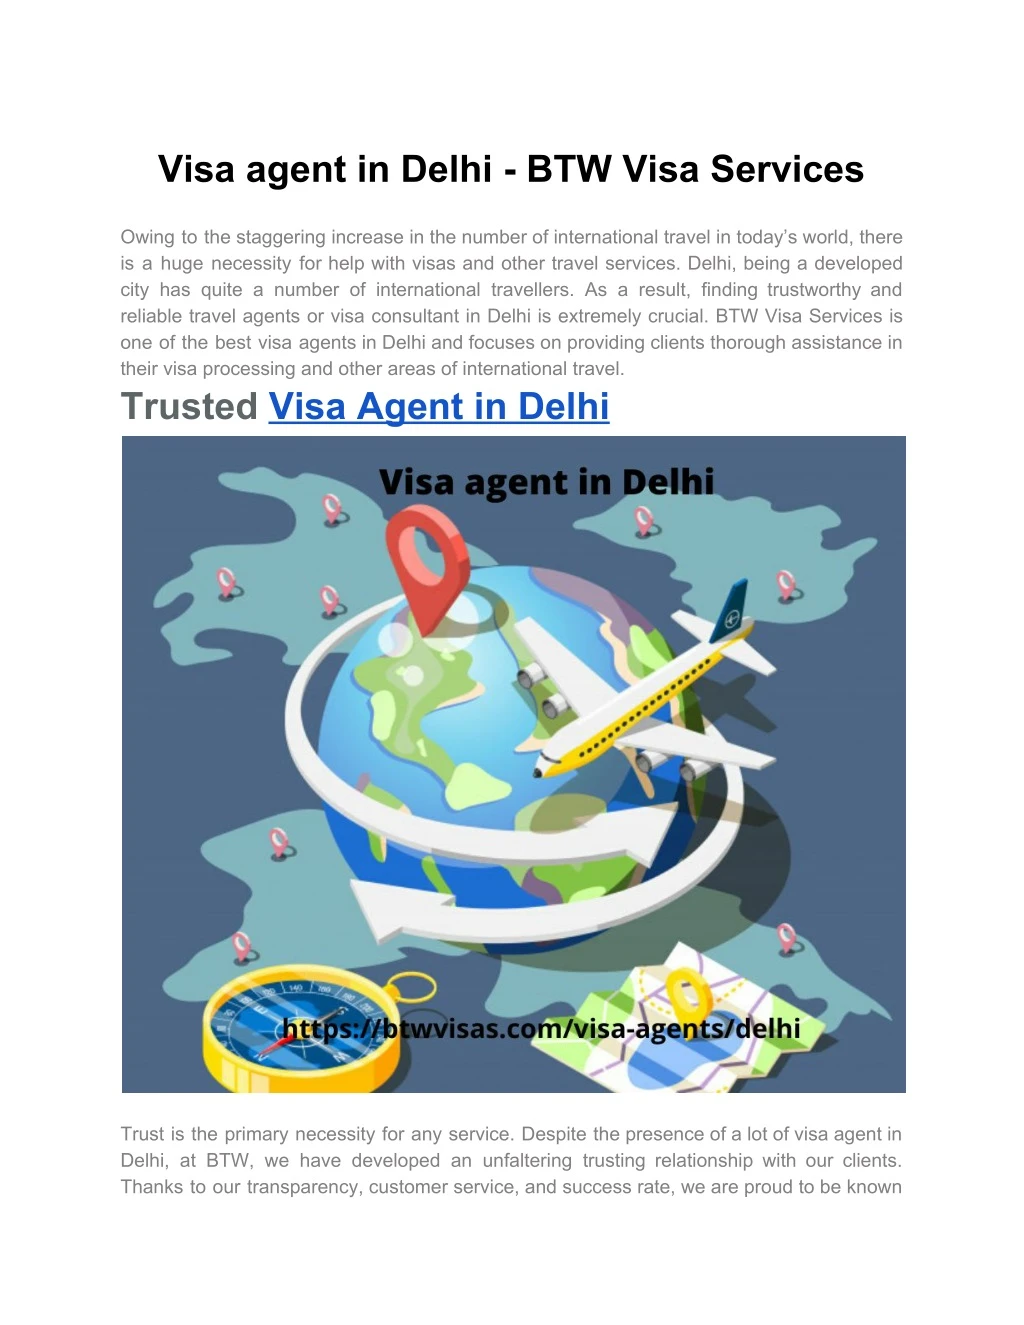 visa agent in delhi btw visa services